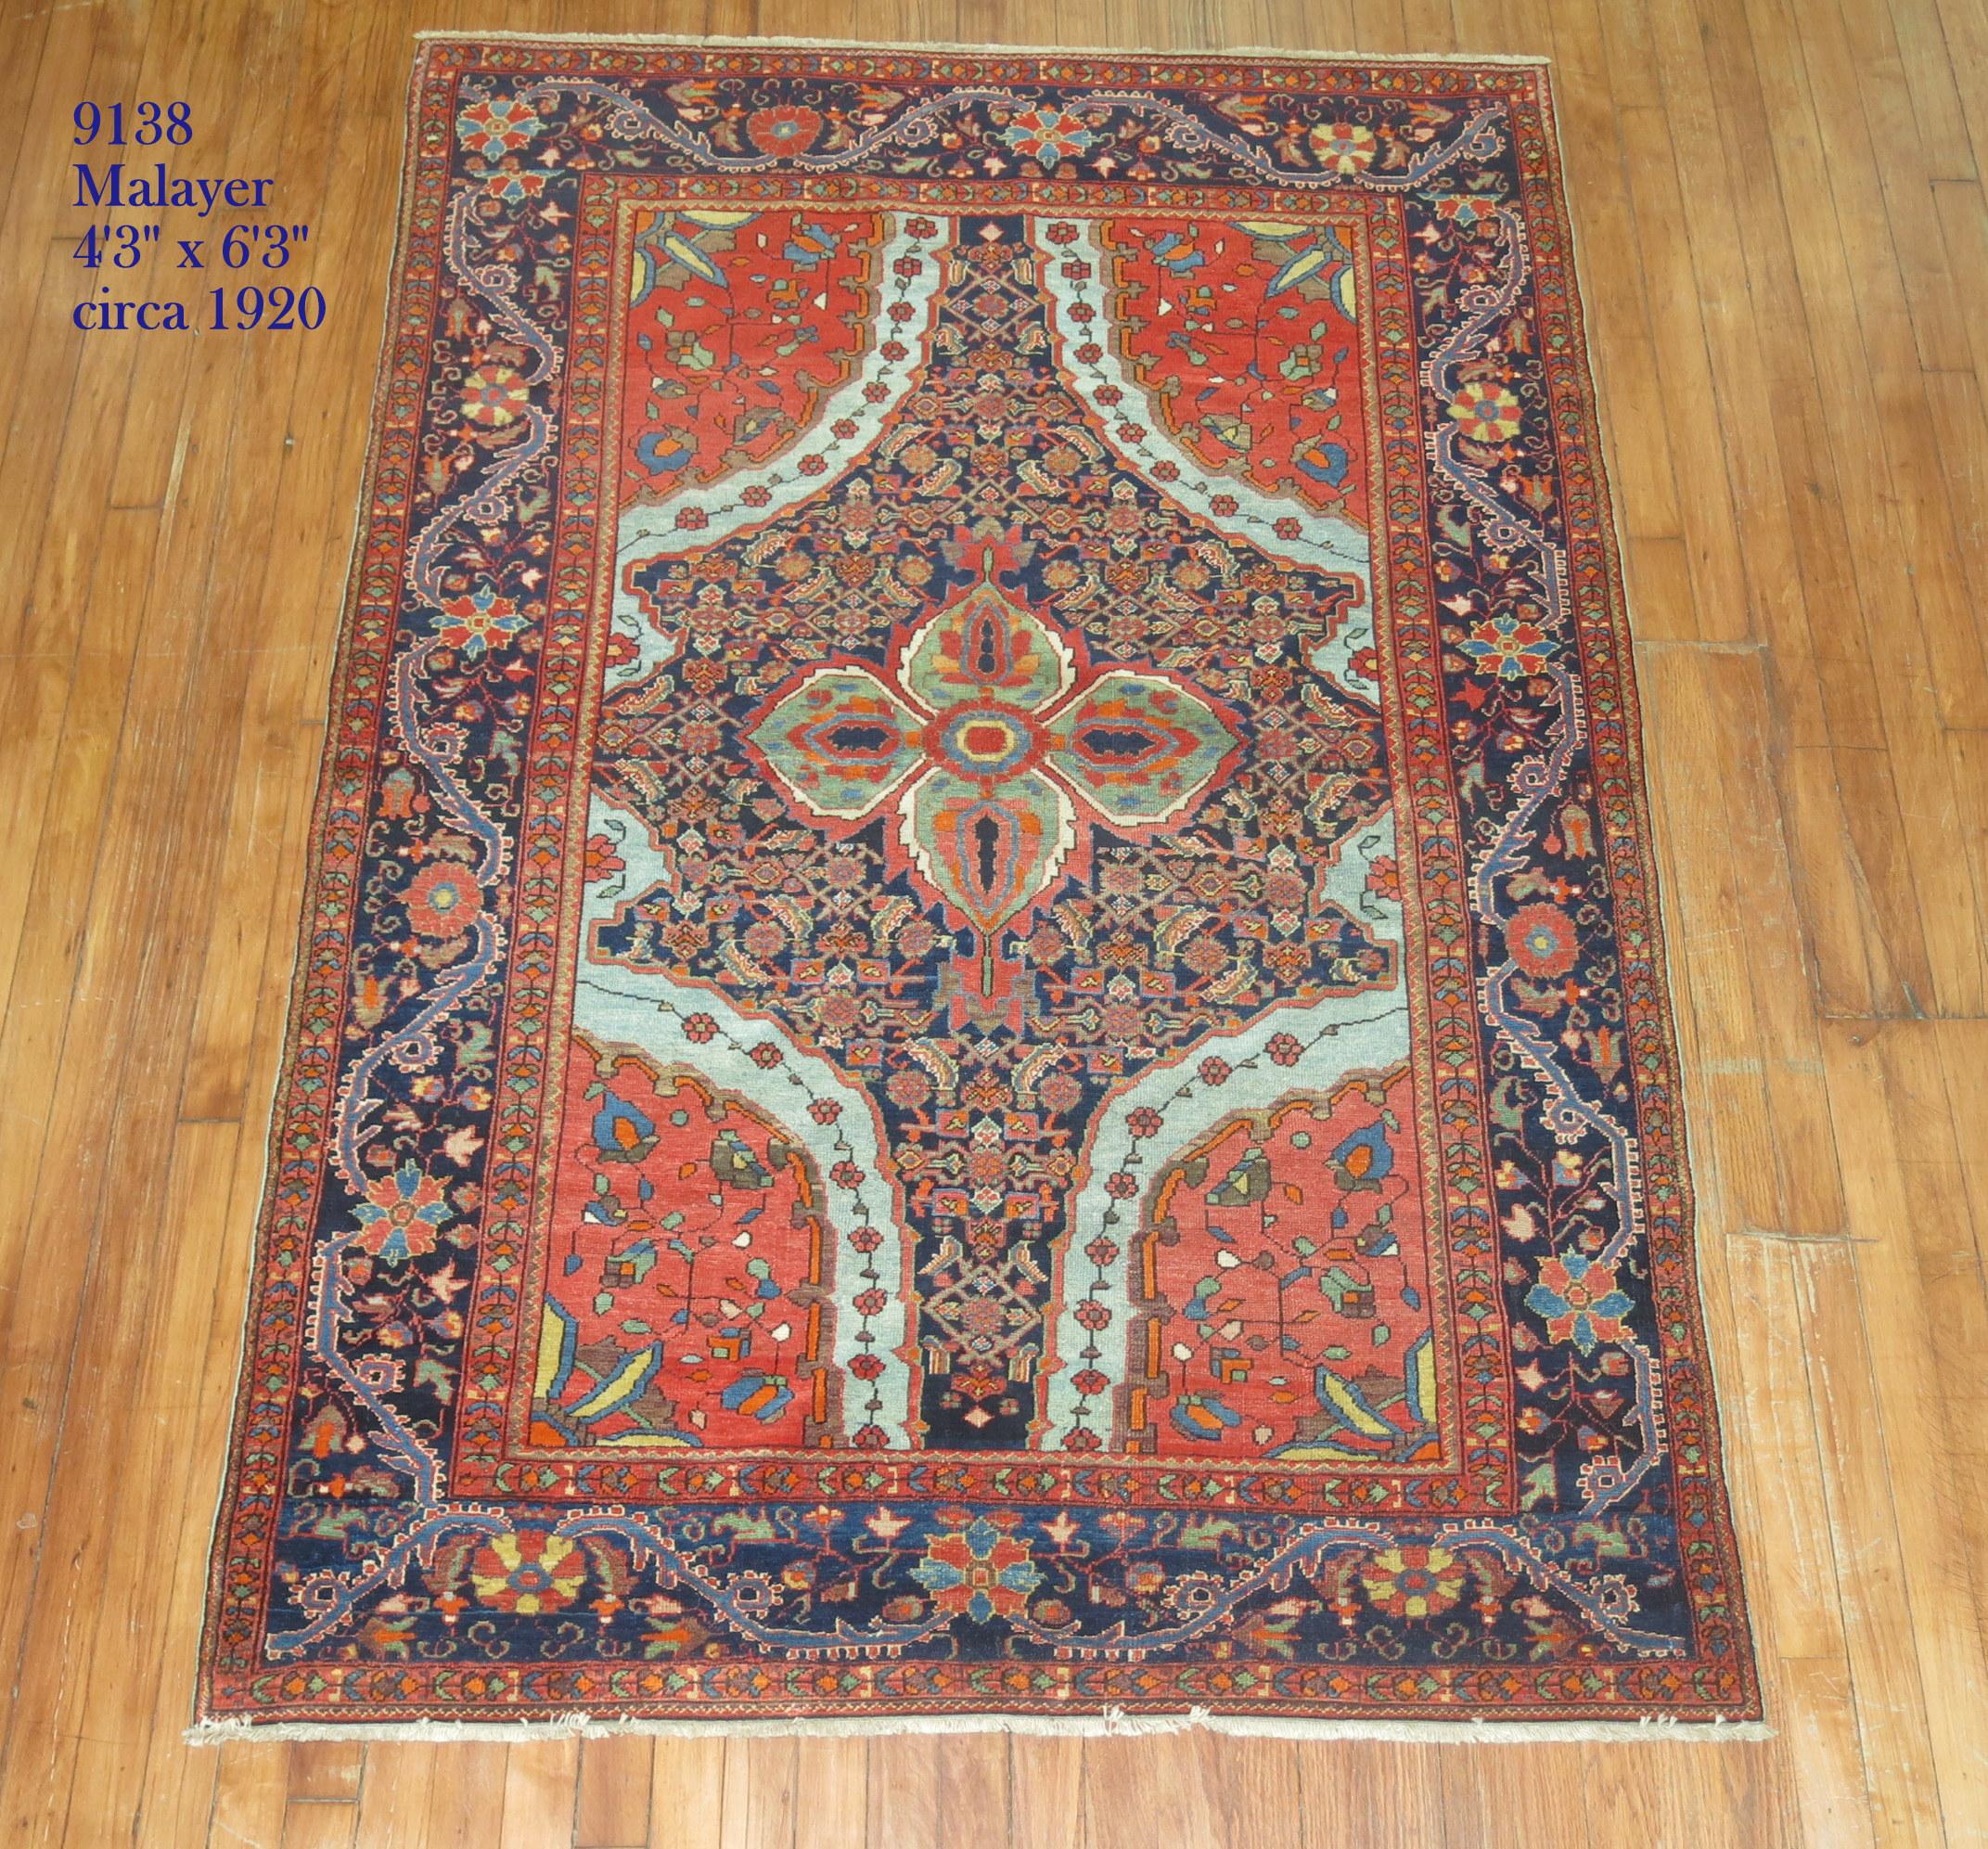 Stunning early 20th century Persian Malayer rug.

4'3'' x 6'3''